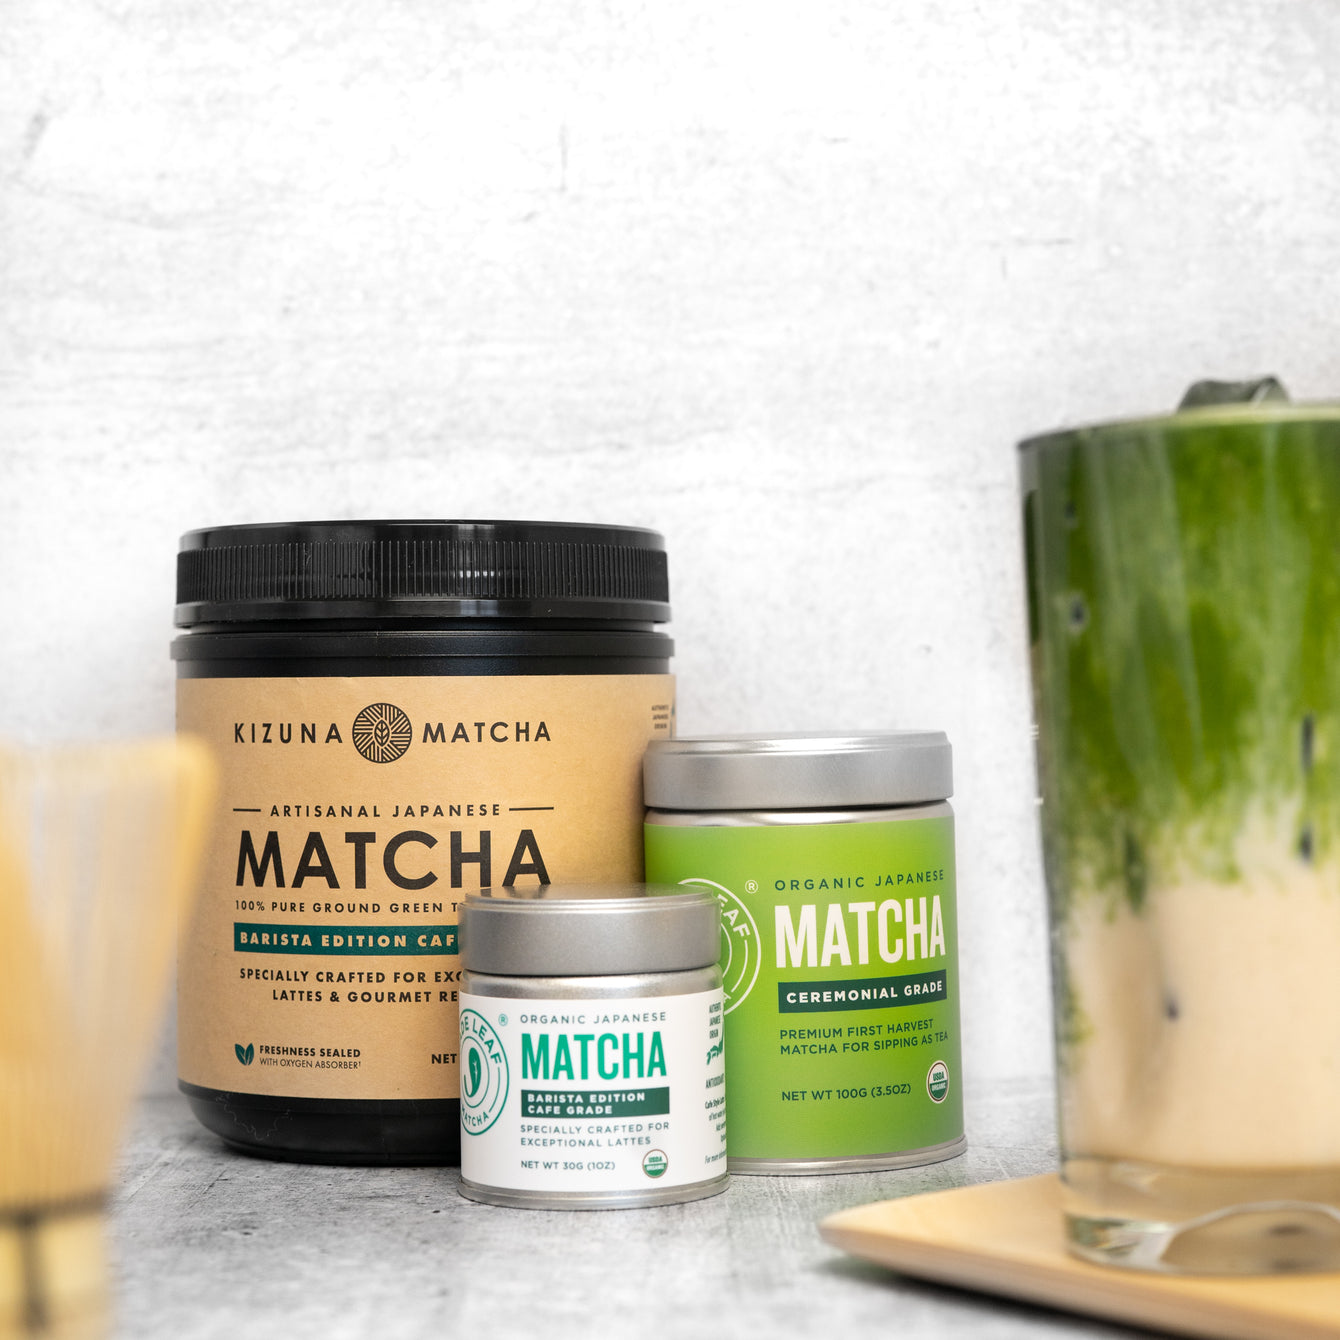 4 Ways to Store Matcha and Keep it Fresh